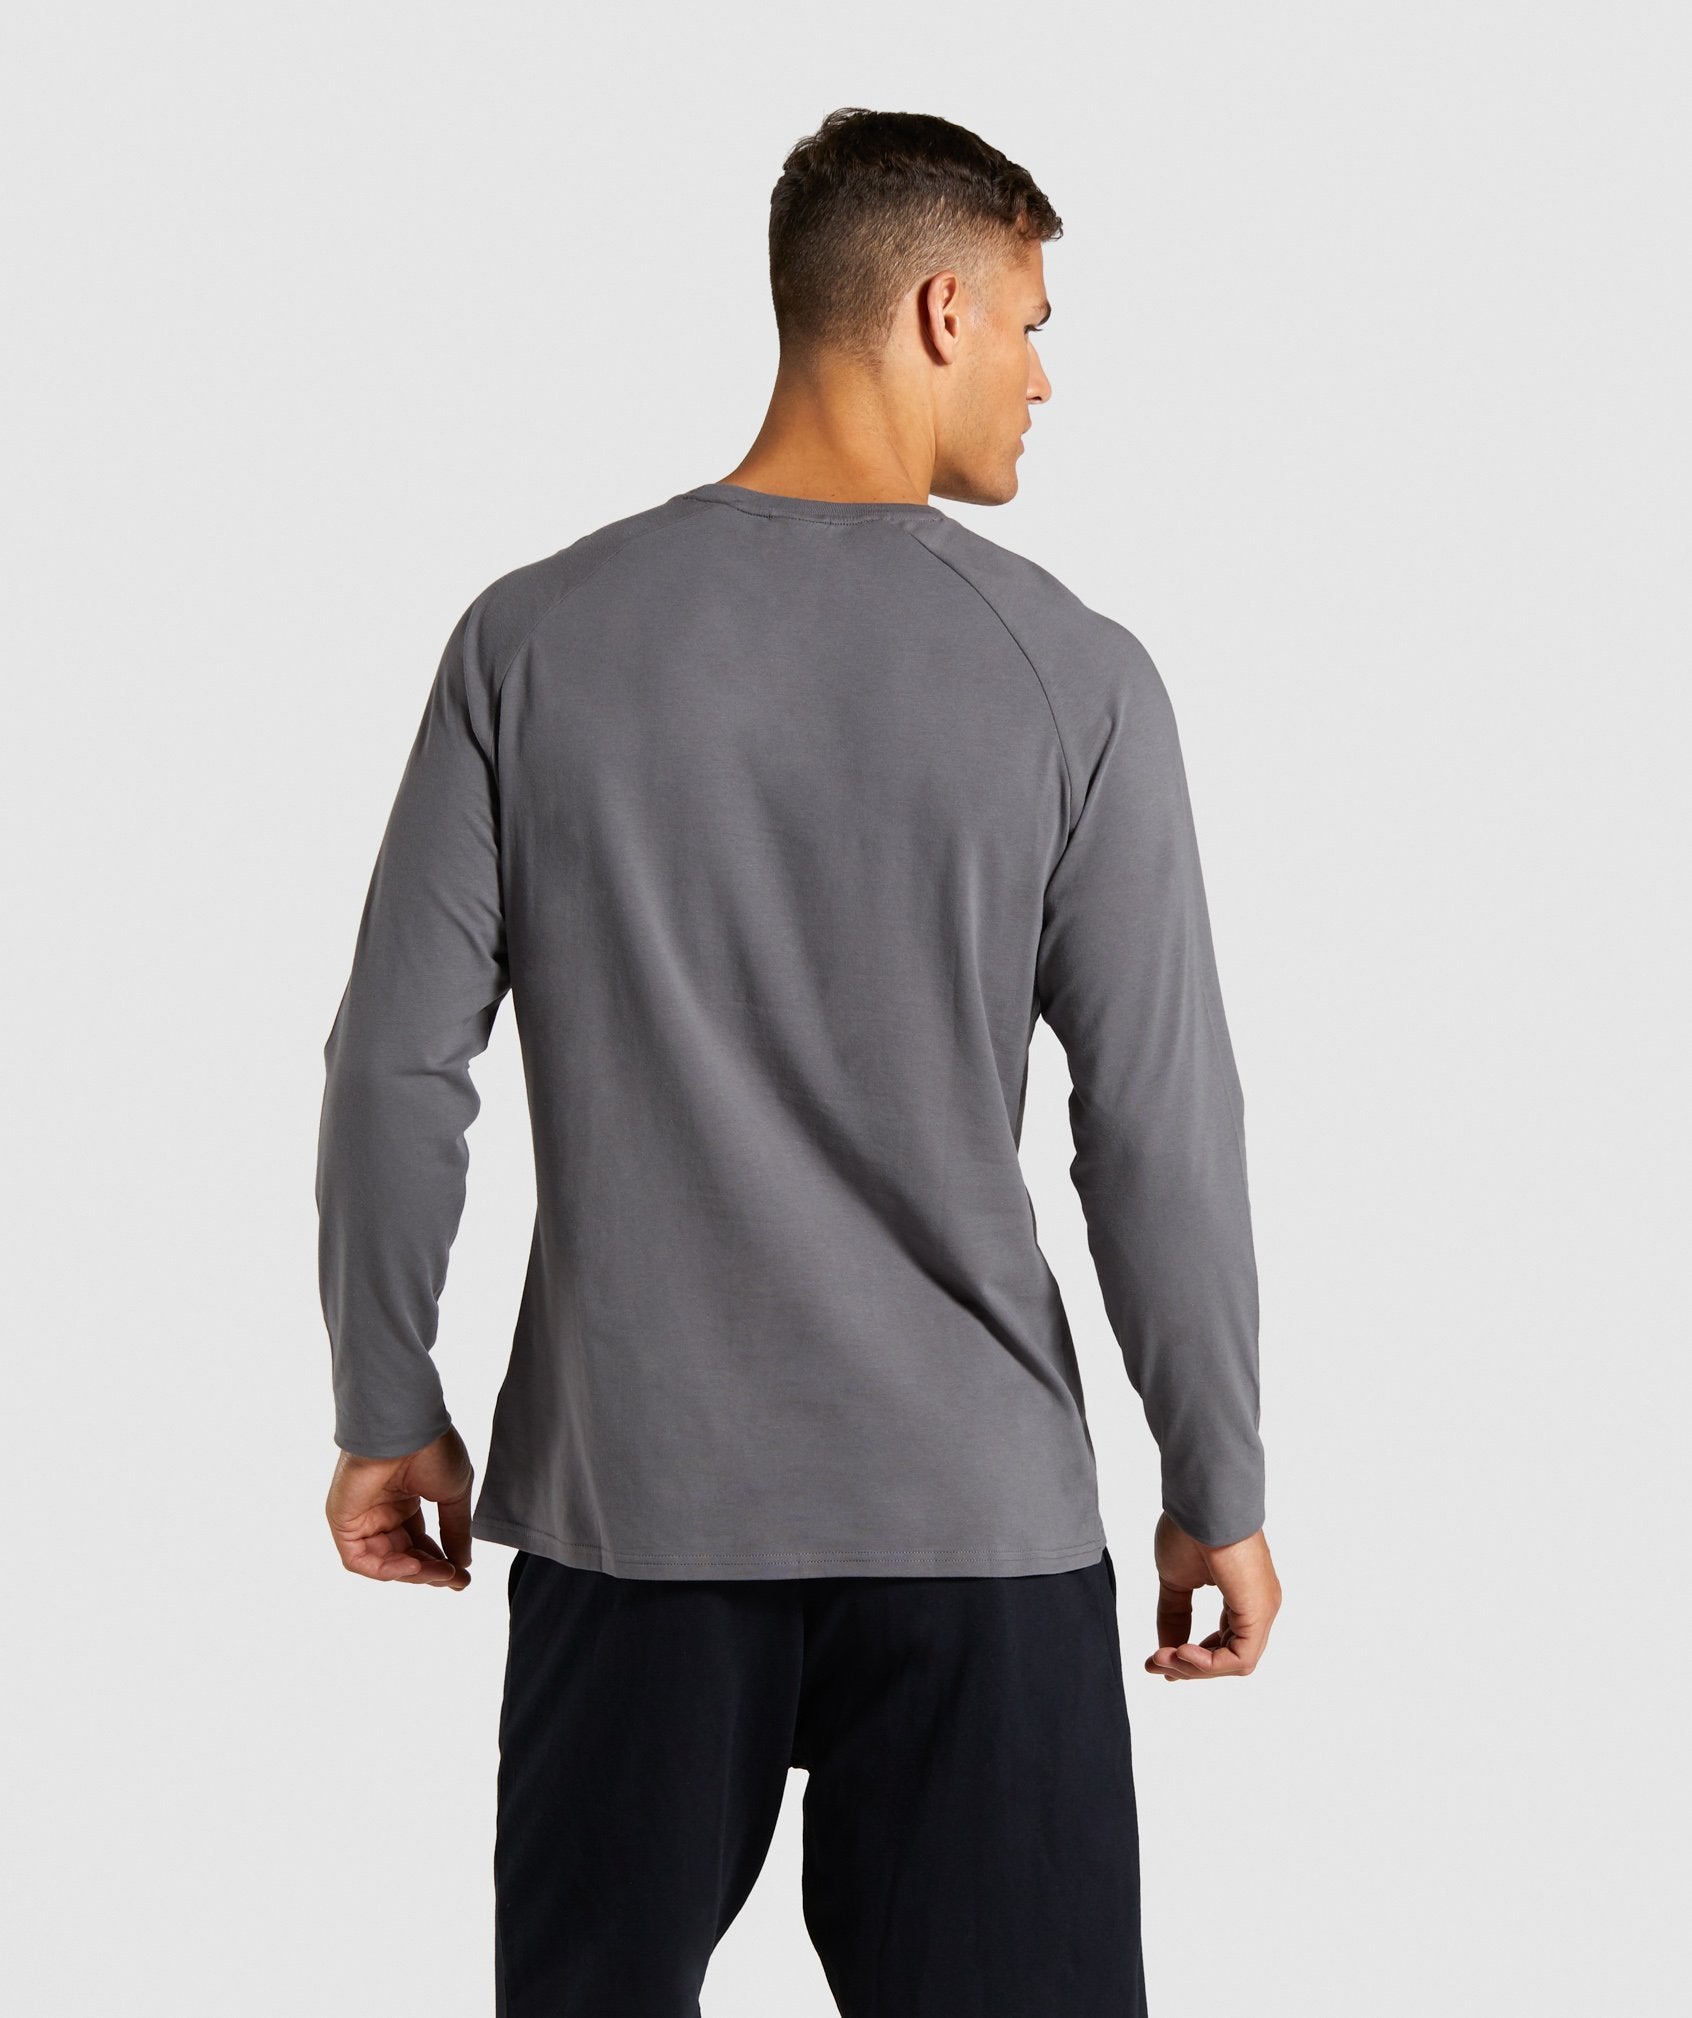 Apollo Long Sleeve T-Shirt in Grey